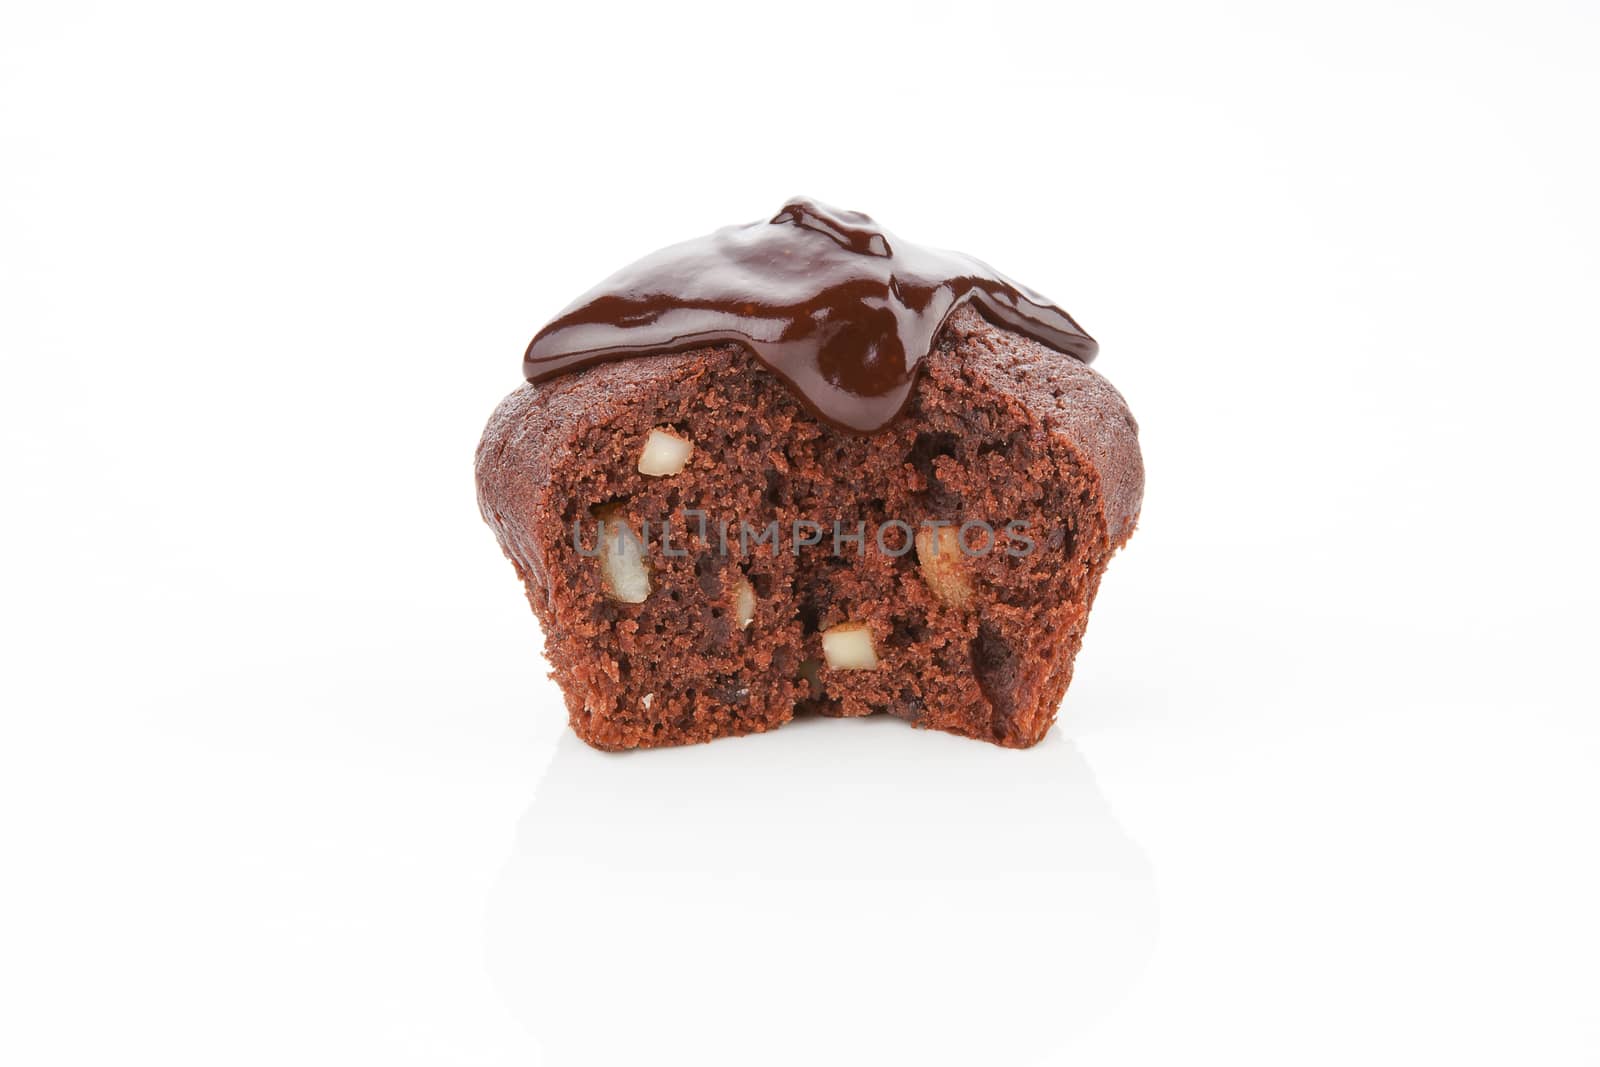 Luxurious homemade chocolate muffin with chocolate garnish isolated on white background.